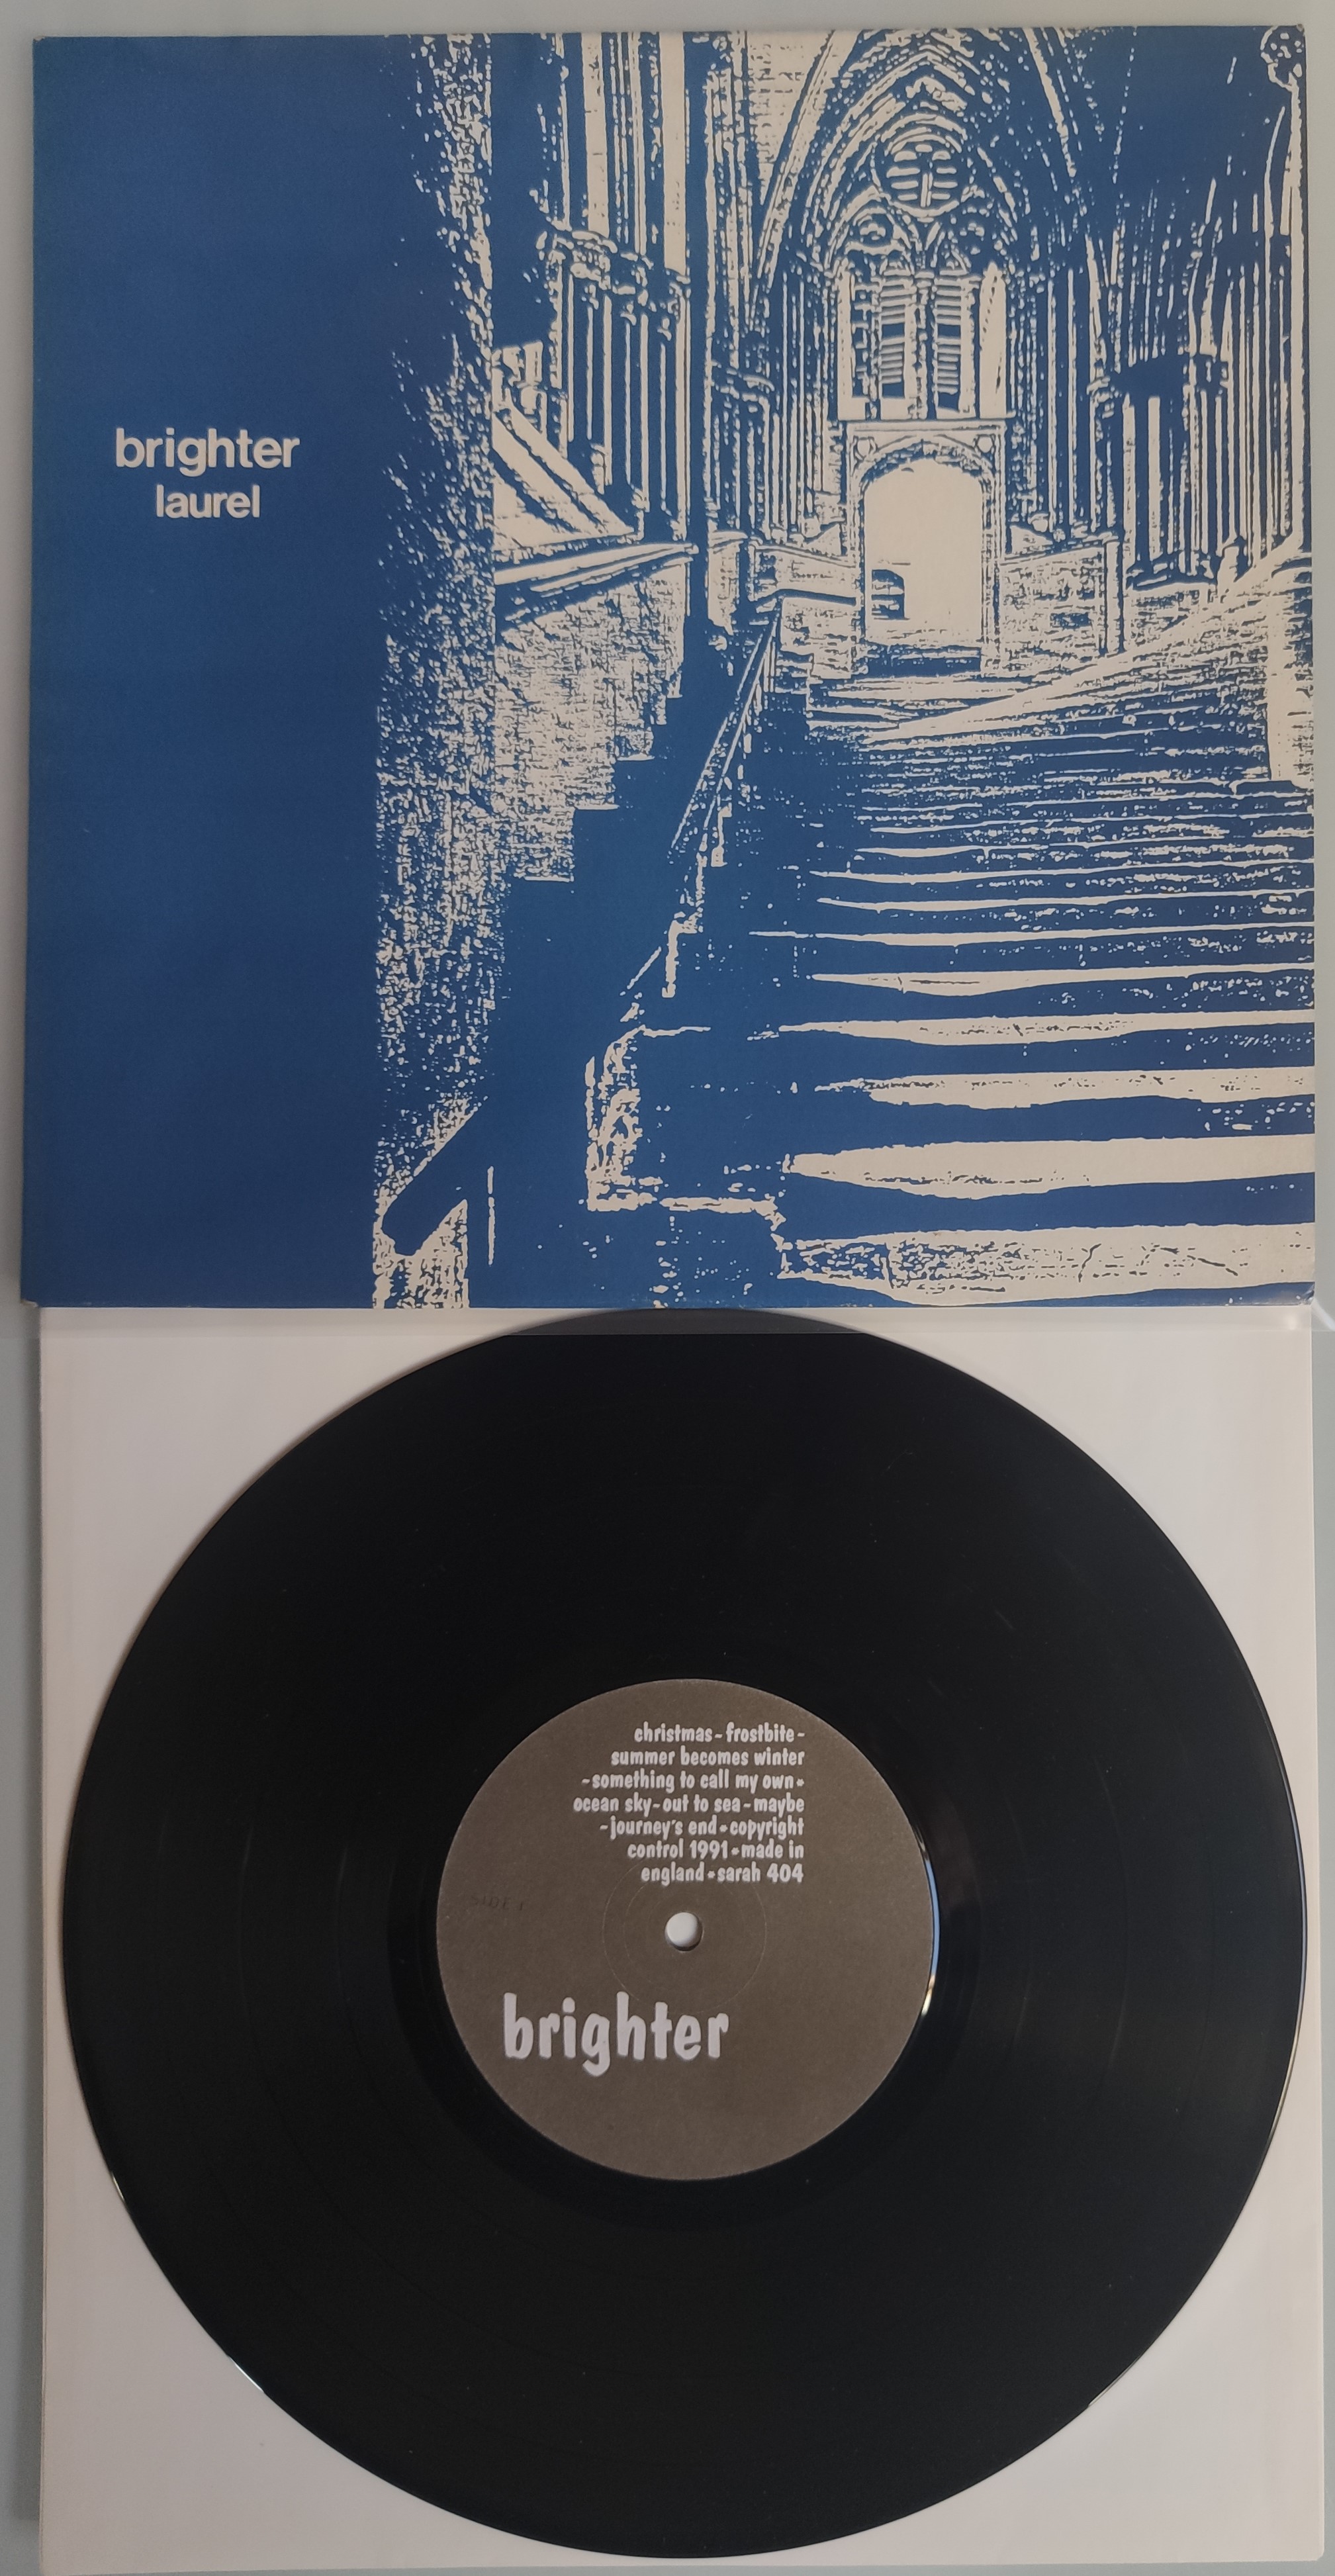 Brighter – Laurel 10” Vinyl Record – UK 1991 First Pressing A1 / B1. EX Condition.